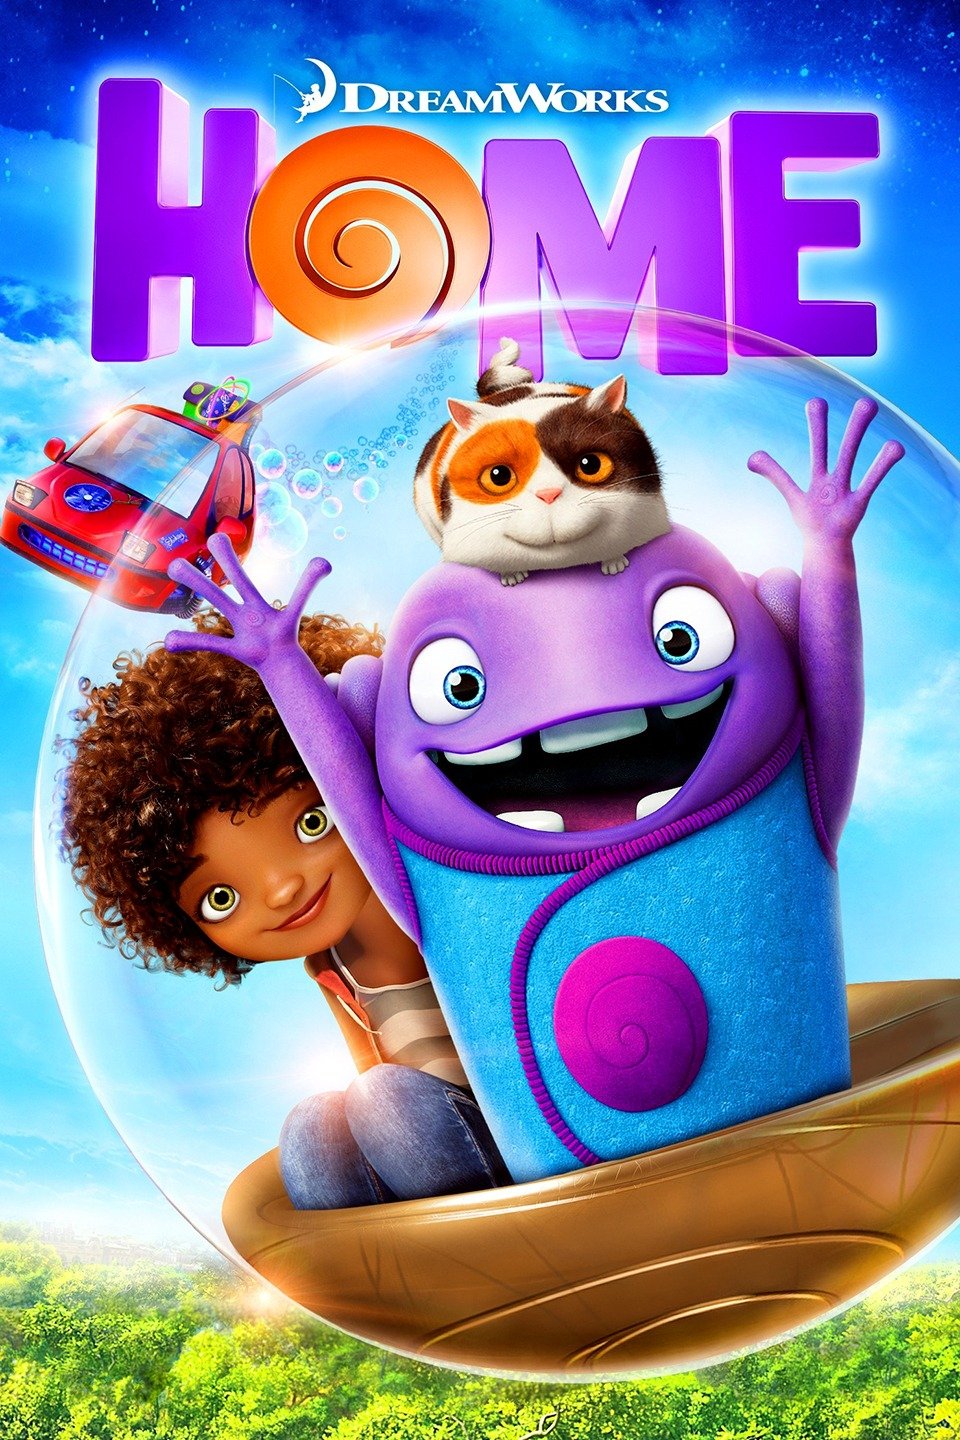 [MINI Super-HQ] Home (2015) โฮม [1080p] [พากย์ไทย 5.1 + เสียงอังกฤษ DTS] [บรรยายไทย + อังกฤษ] [เสียงไทย + ซับไทย] [ONE2UP]